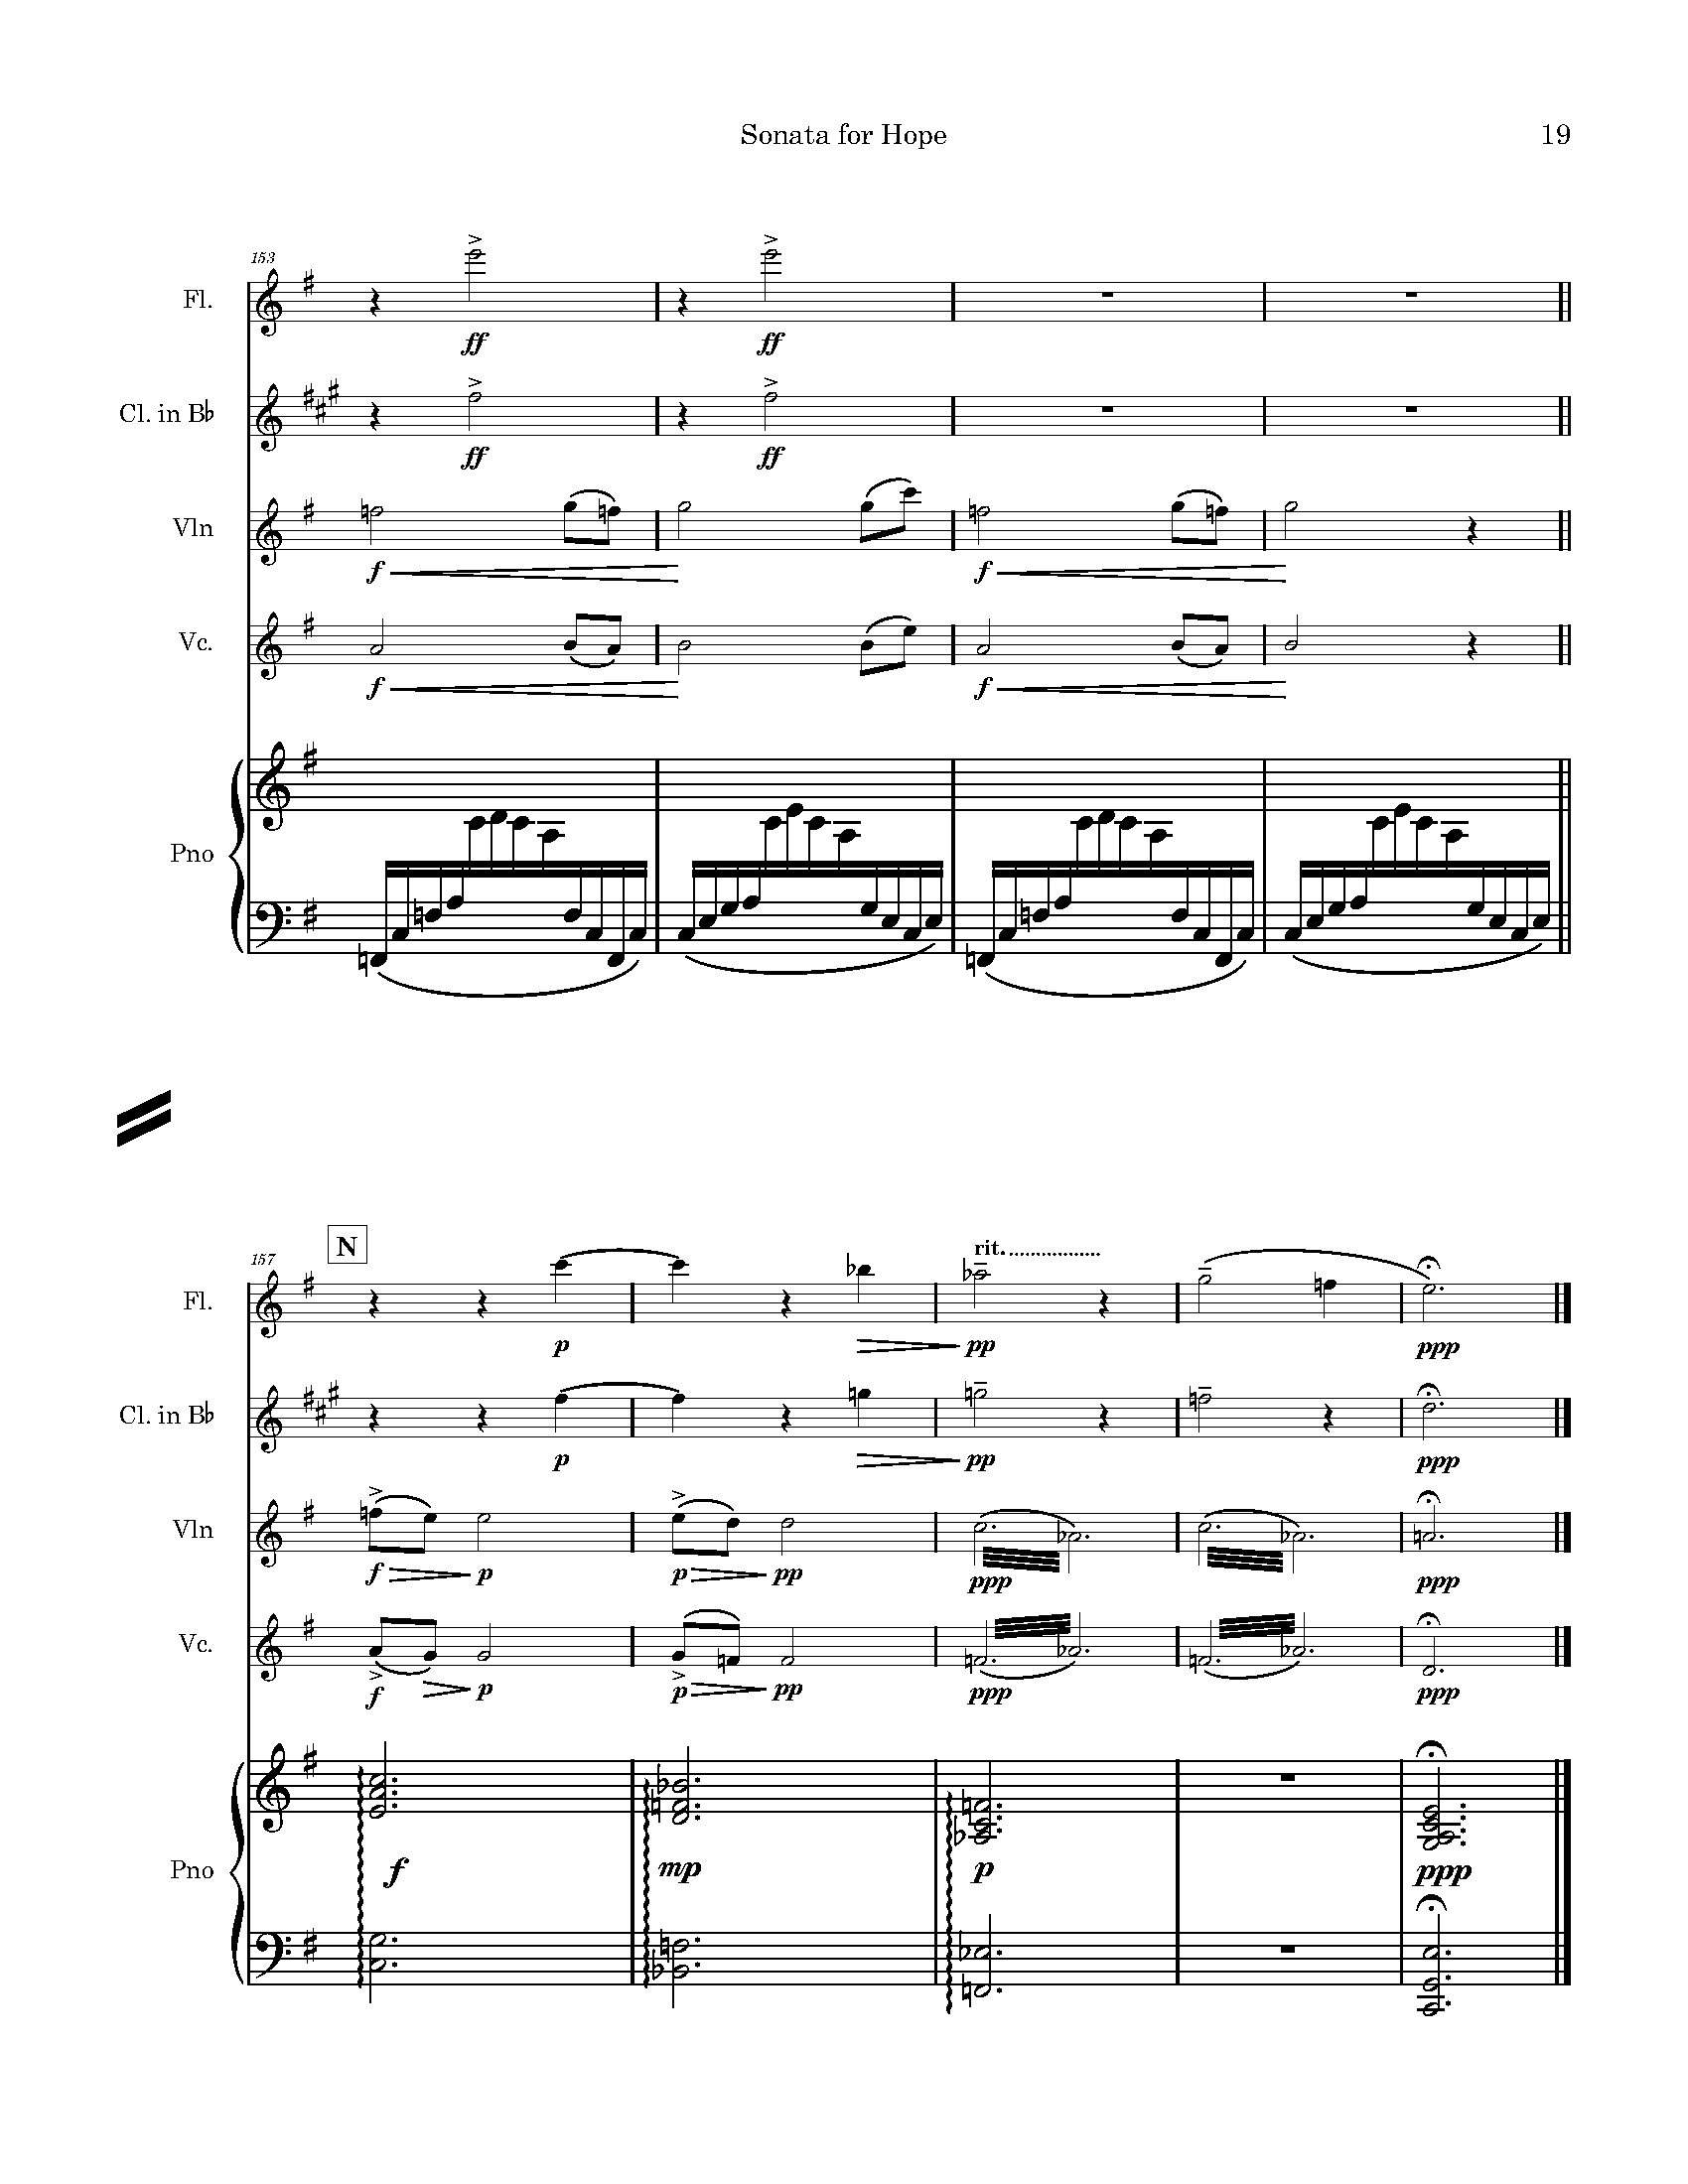 Sonata for Hope - Piano Score_Page_19.jpg